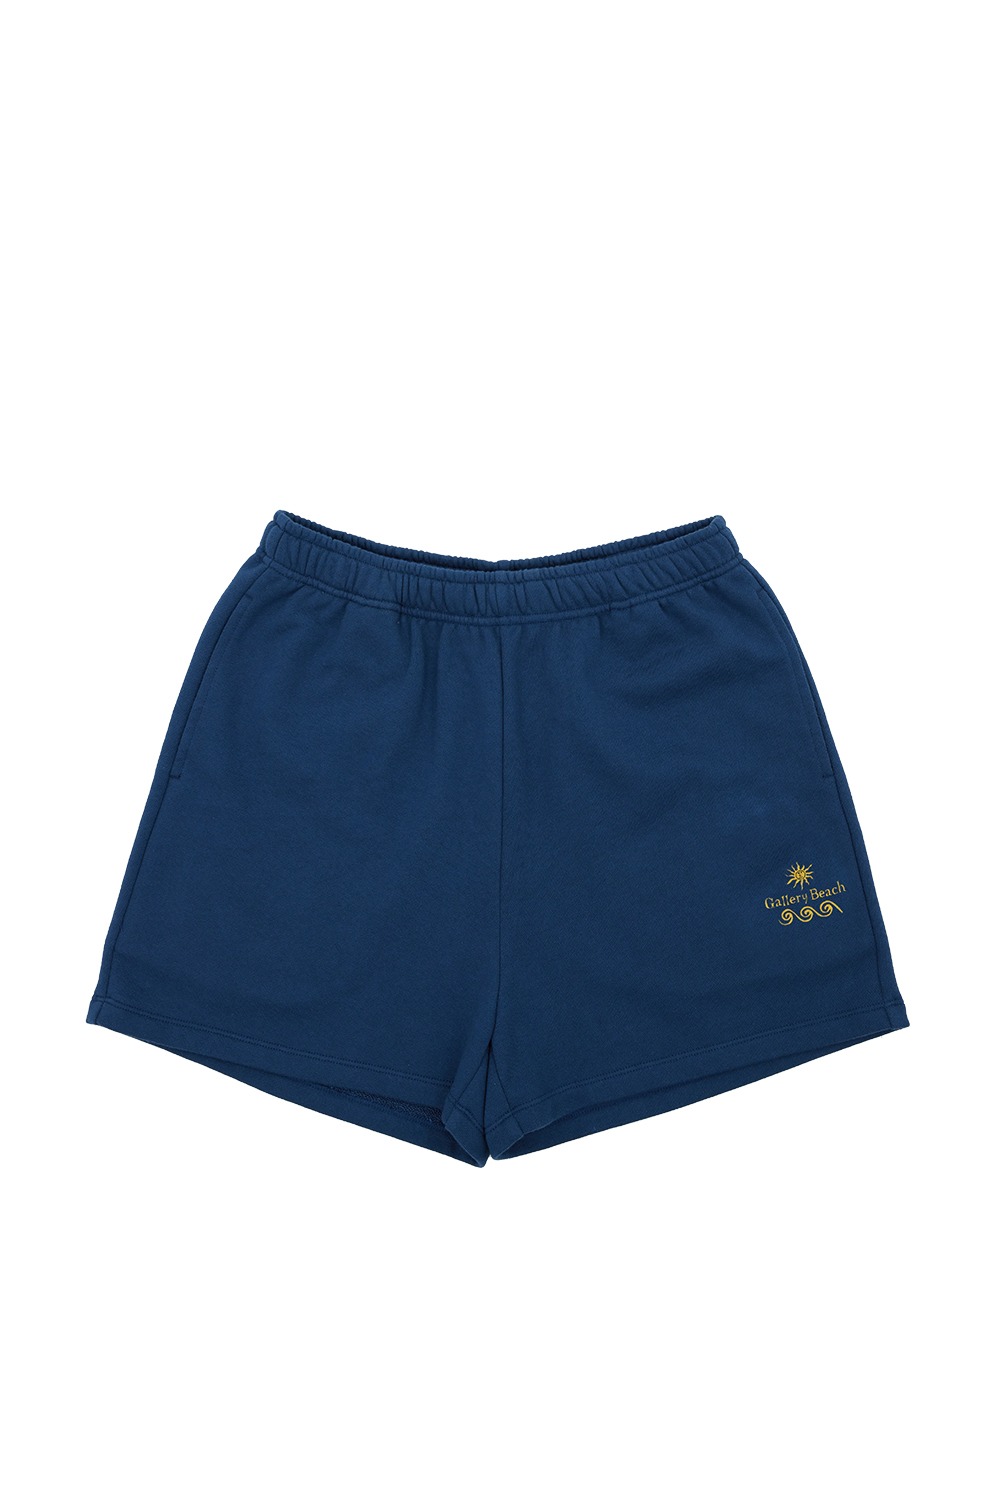 Gallery Beach Sweat Shorts - Blue